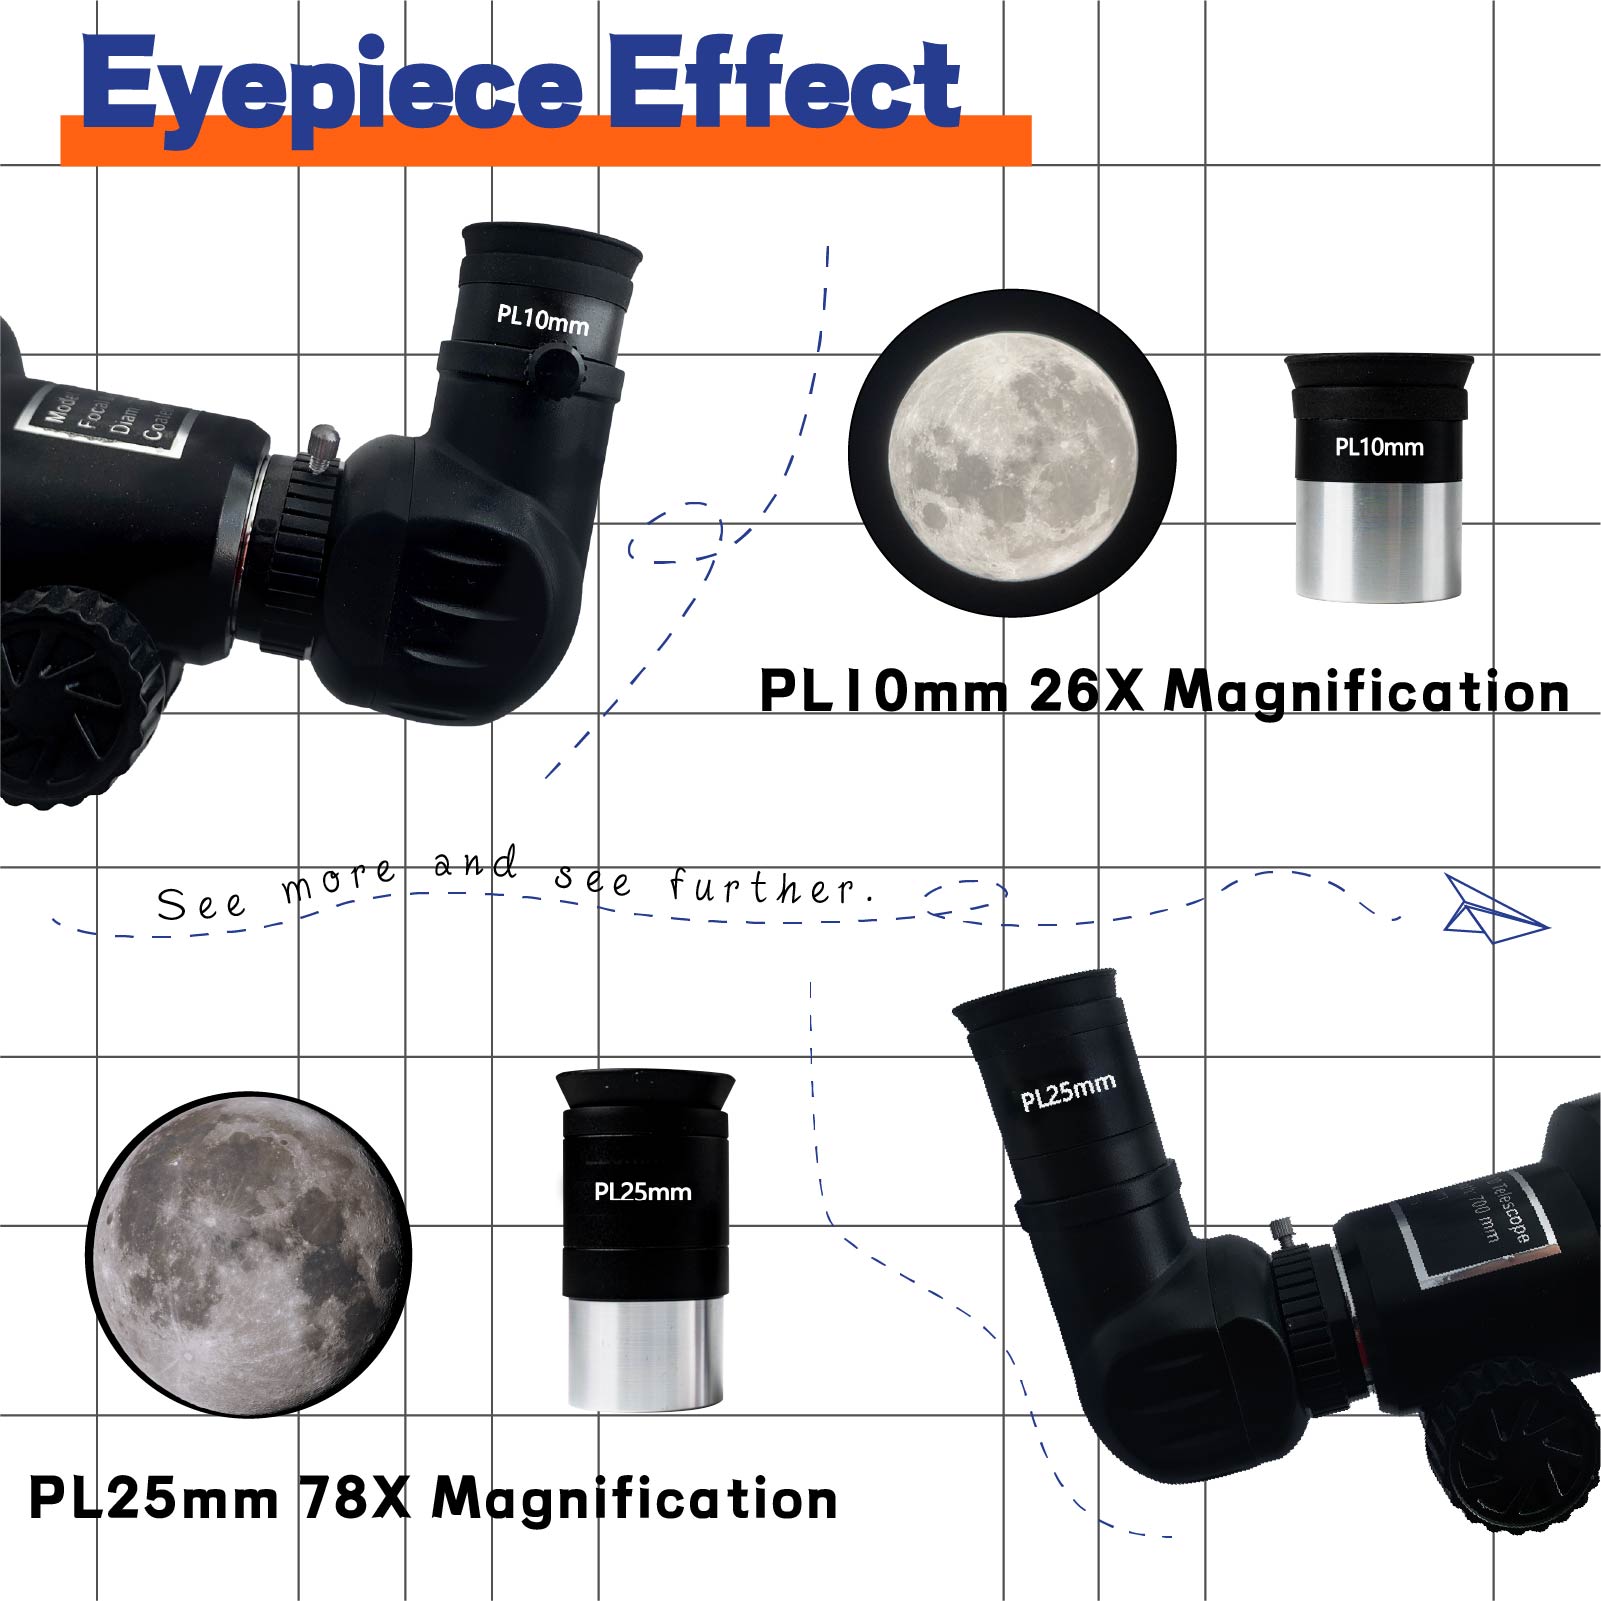 Kepulsar 70mm Refractor Telescope: 2 Eyepieces, 3X Barlow Lens, Fully-Coated Glass Optics